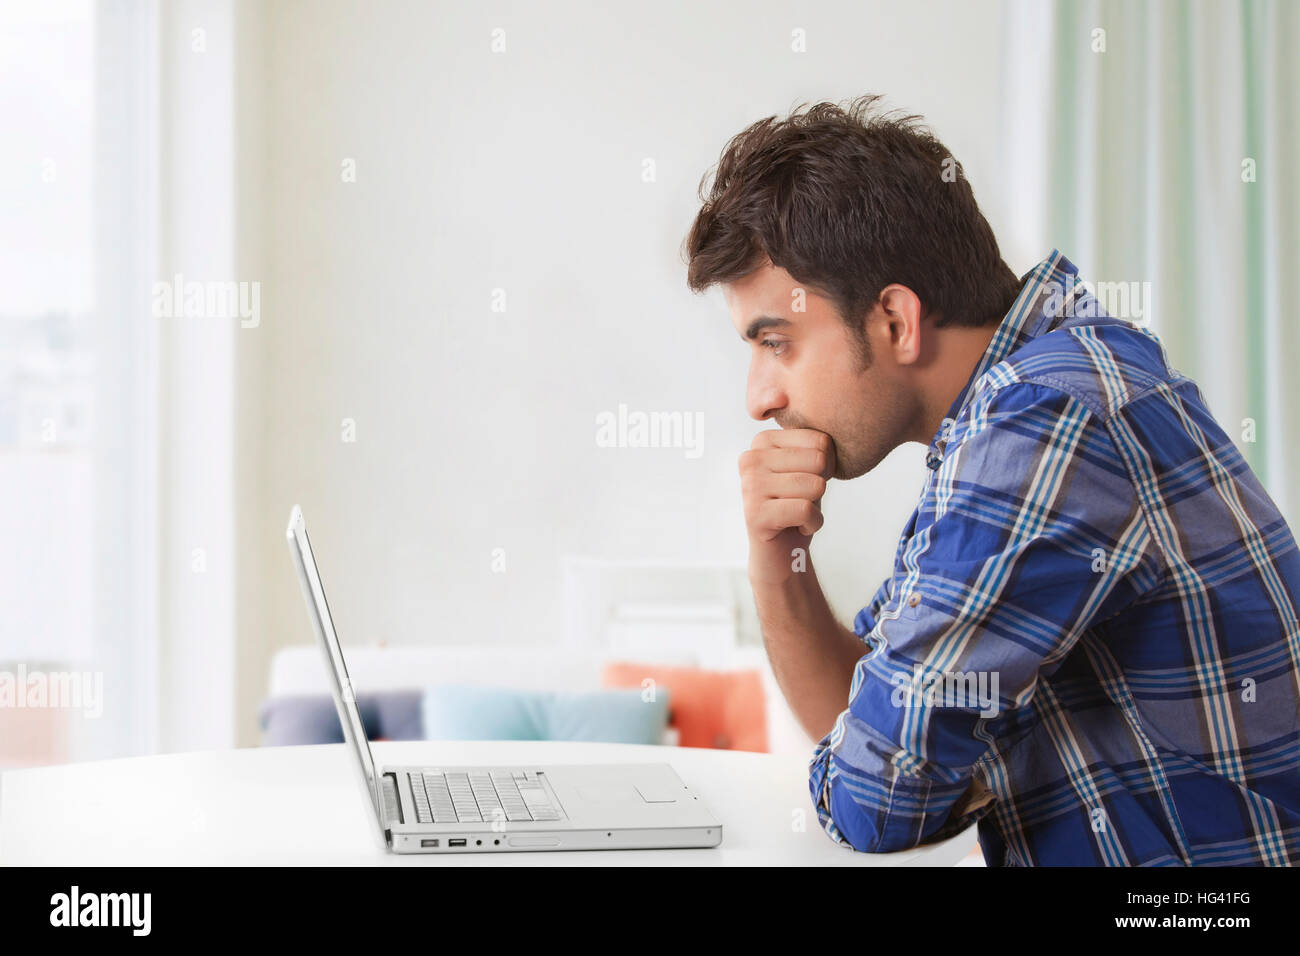 Young man using laptop computer Stock Photo